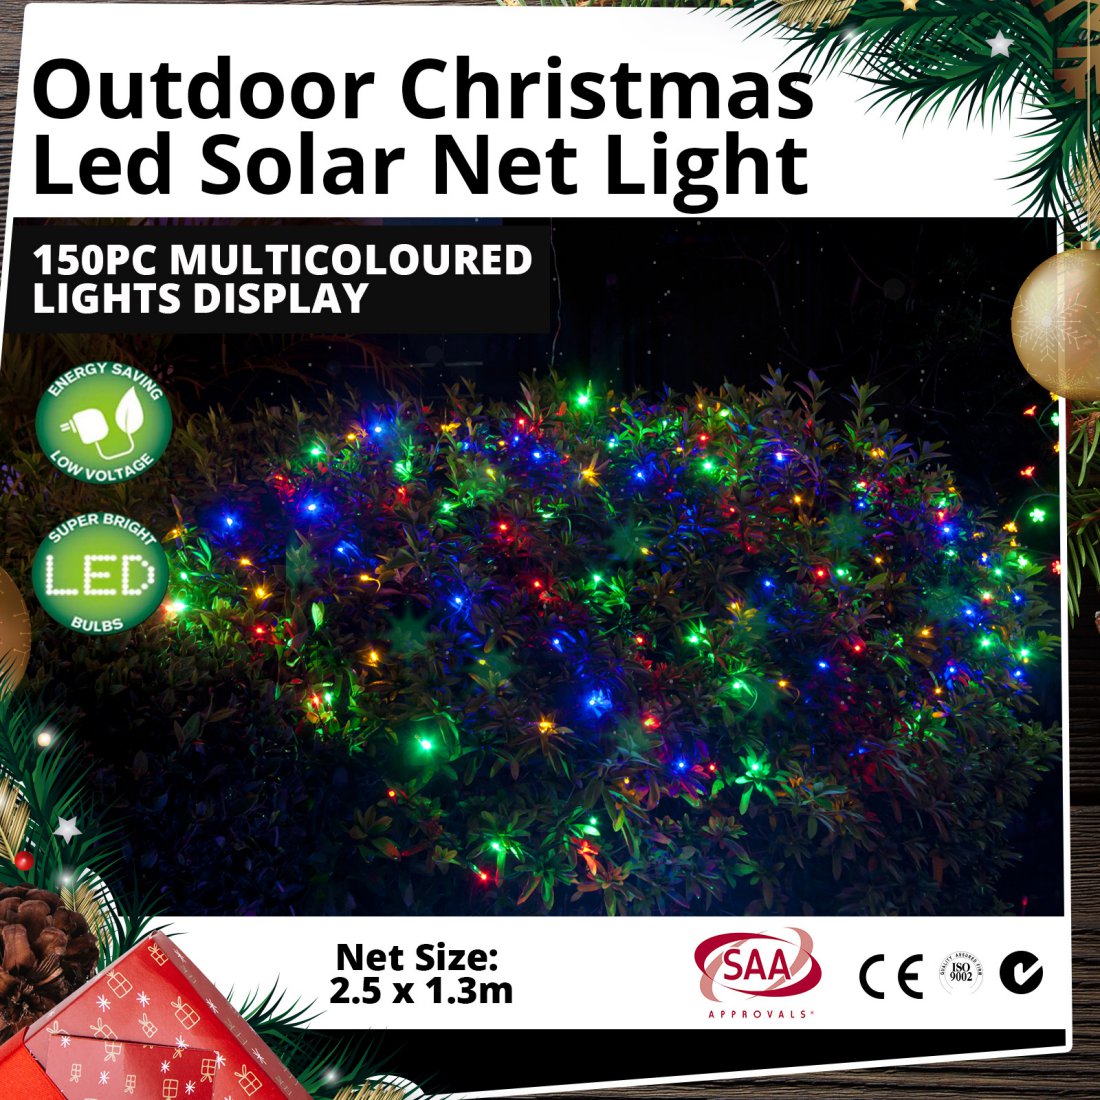 Outdoor LED Solar Net Light 150pc Multicoloured Christmas Lights Display